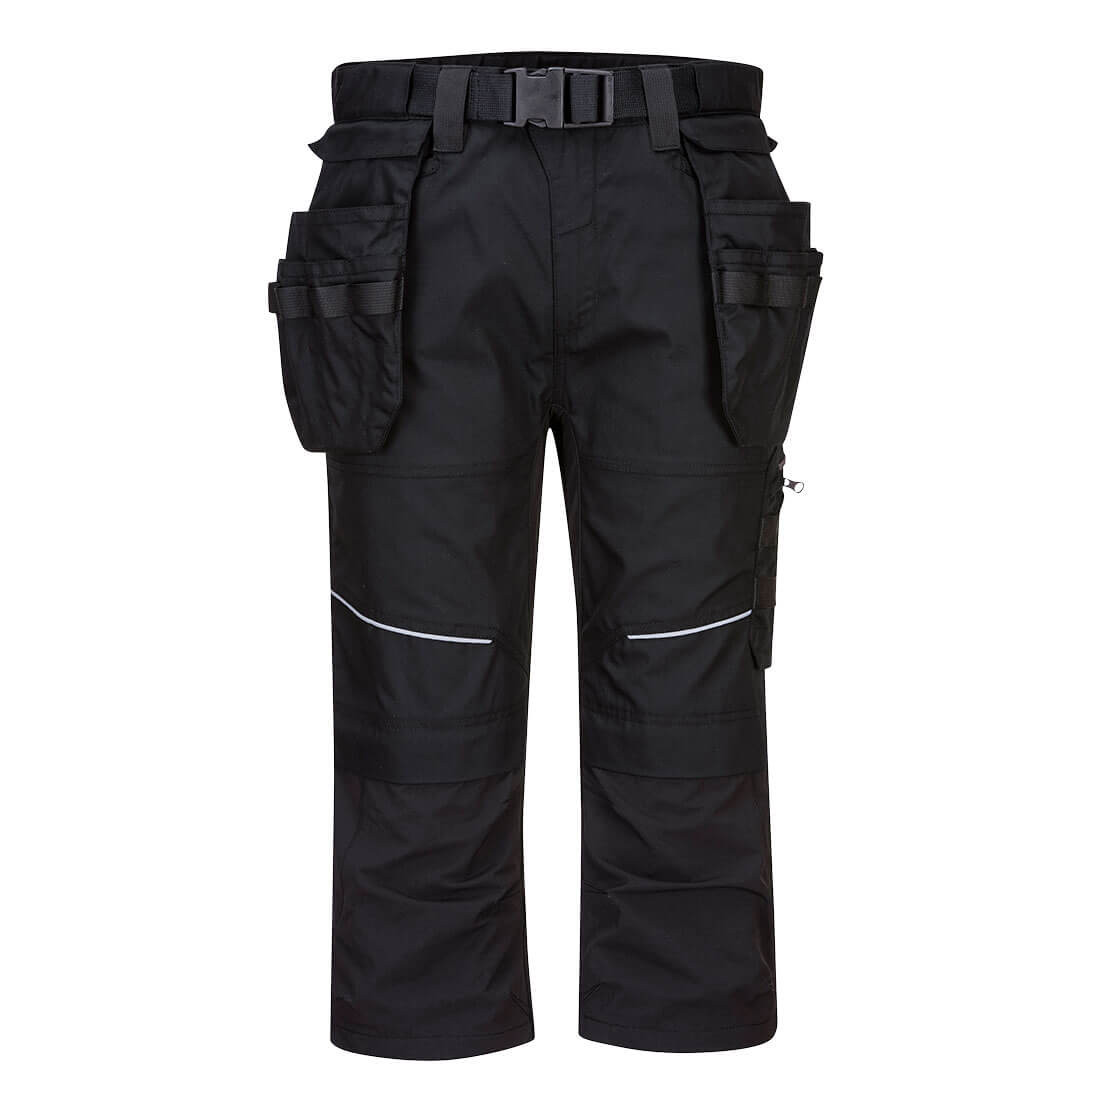 Pantaloni 3/4 KX3 - Imbracaminte de protectie